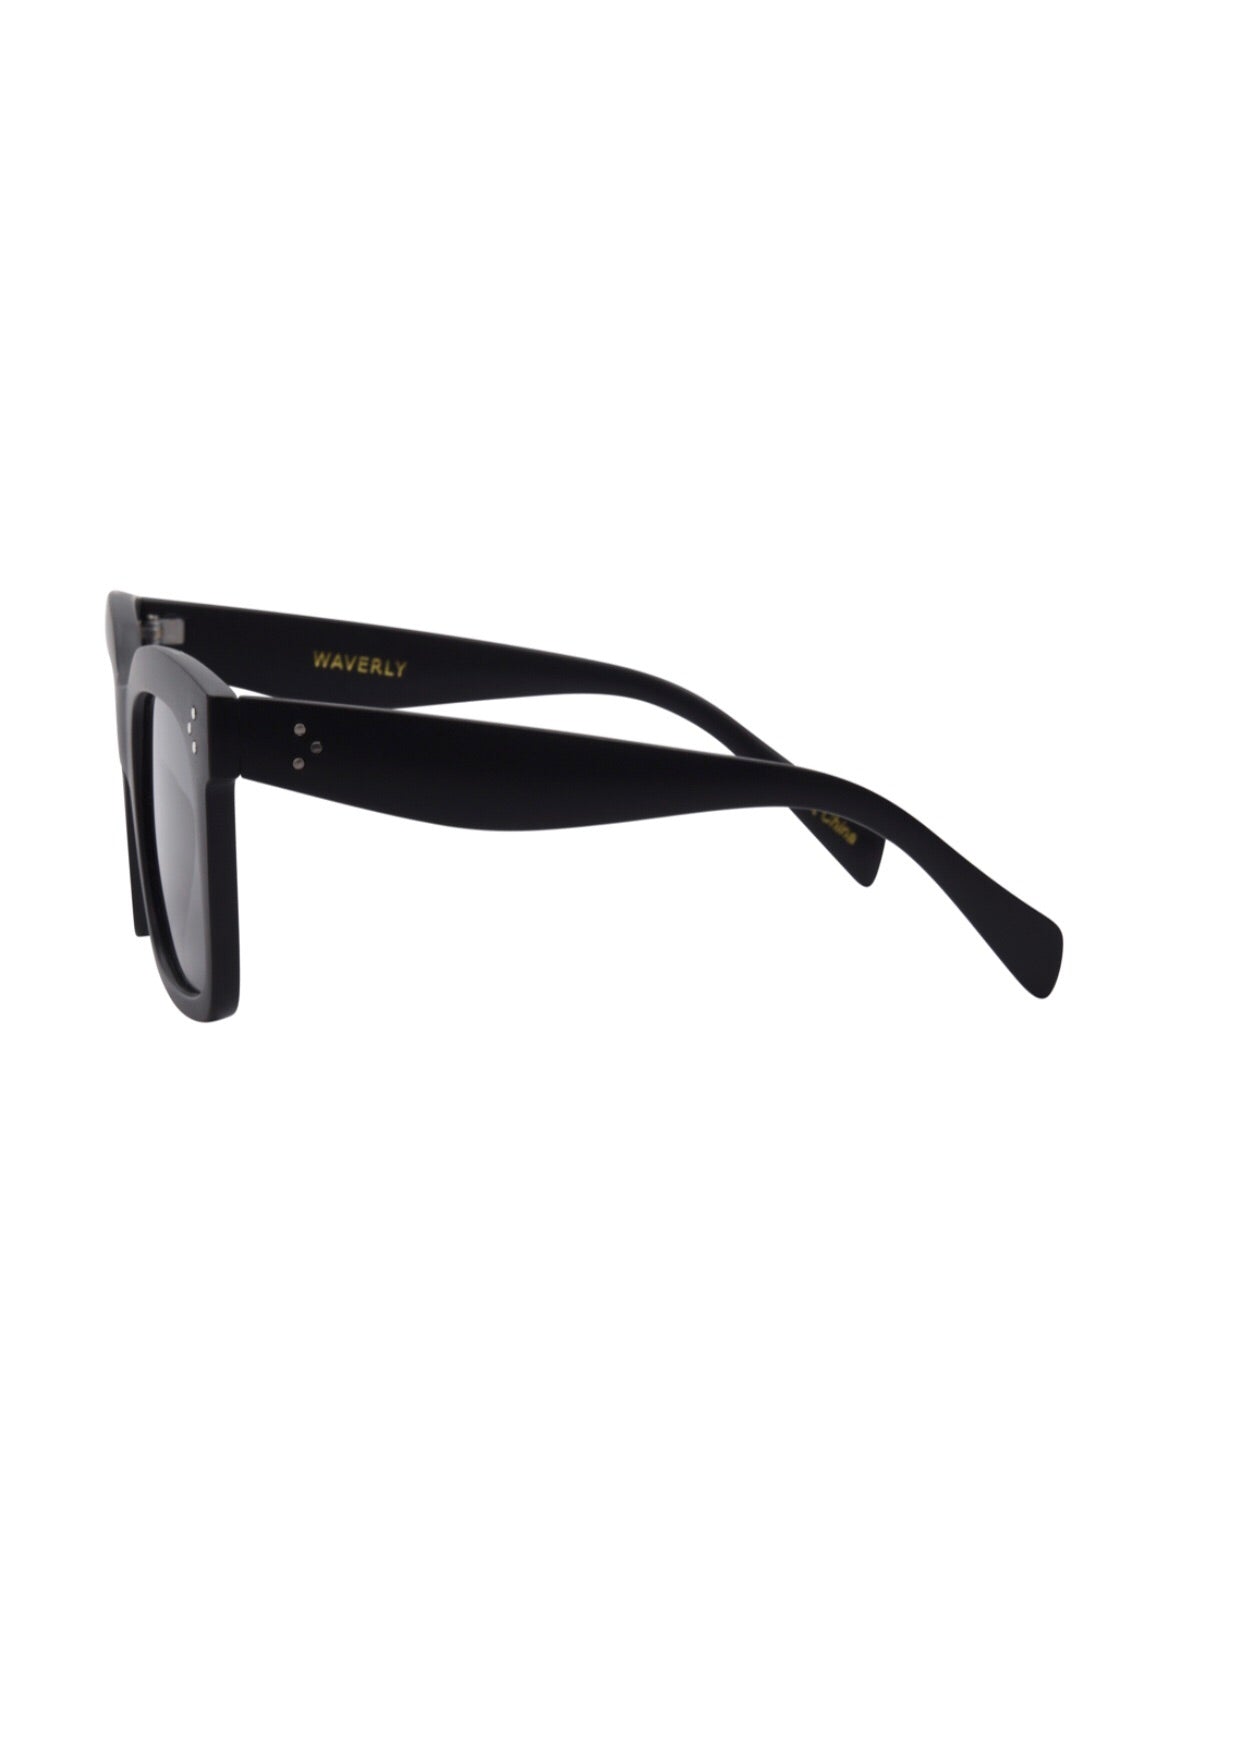 OC Boutique Waverly black sunglasses Isea 3